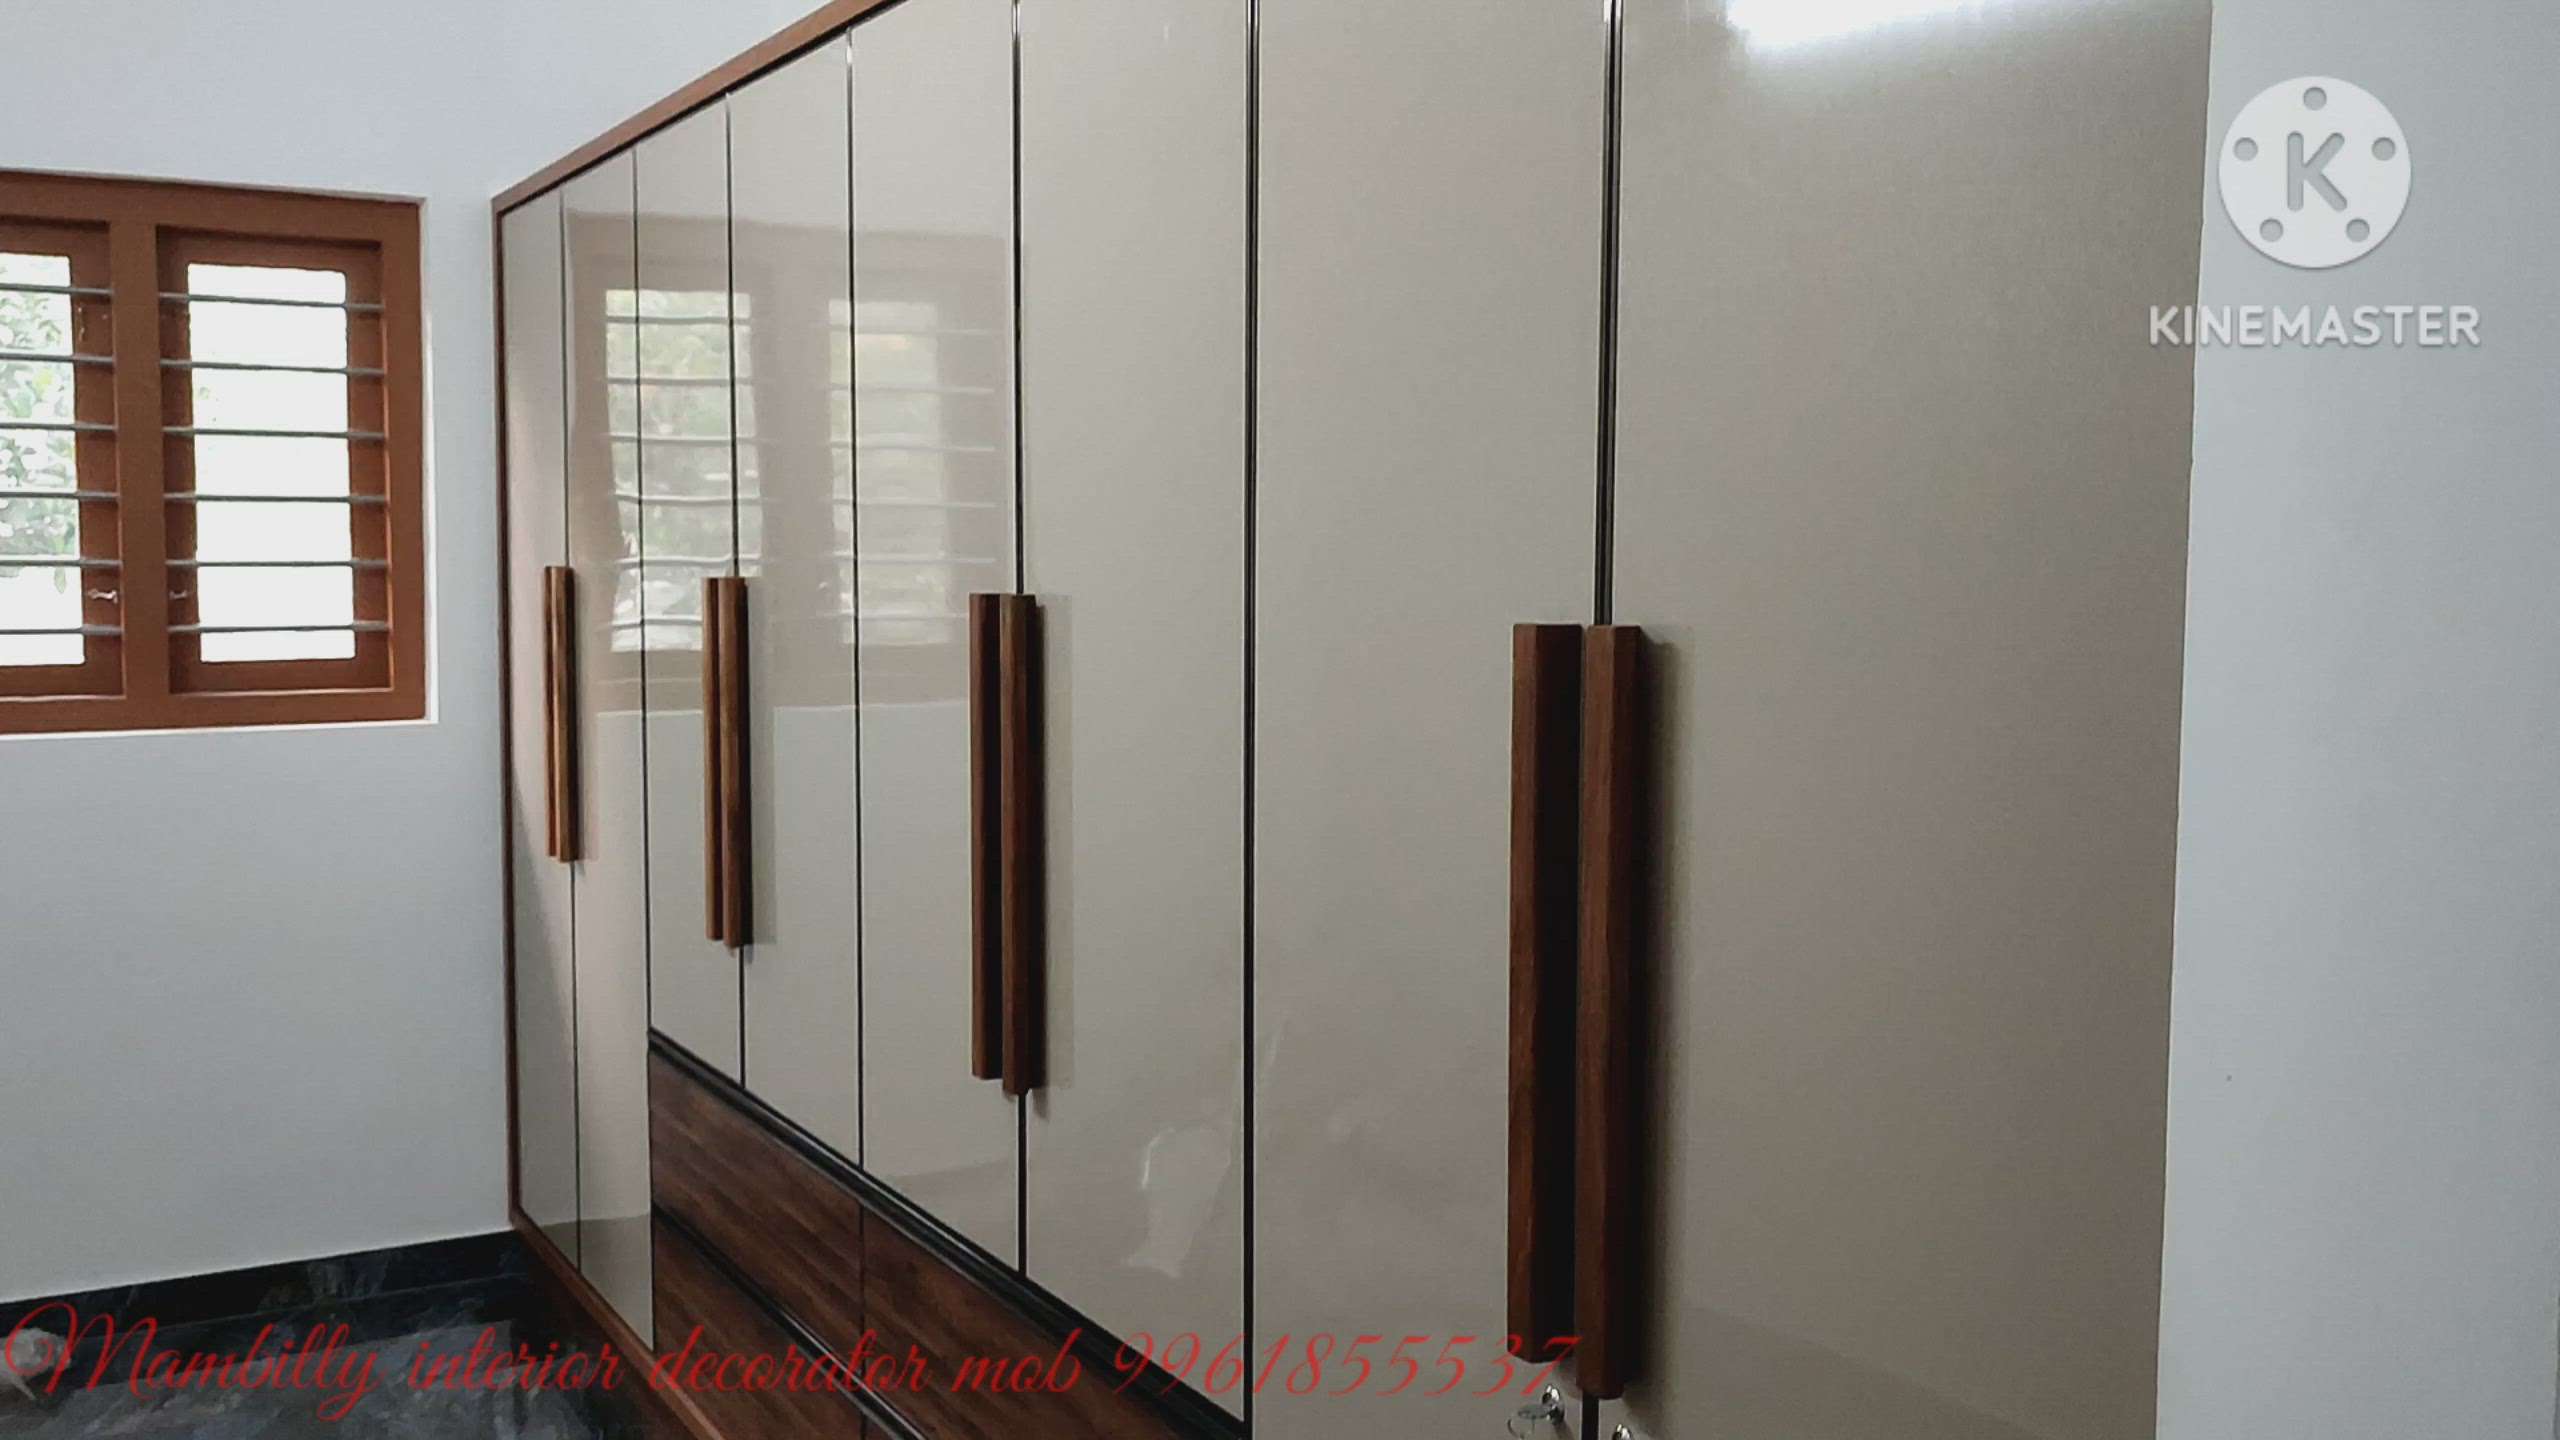 Walldrobe fully made by Aluminium acp pvc hpl aheet # WALLDROBES  #acp_sheet  #pvcsheet  #_aluminium_walldrop__interiors_design #TVStand #l-dressingarea